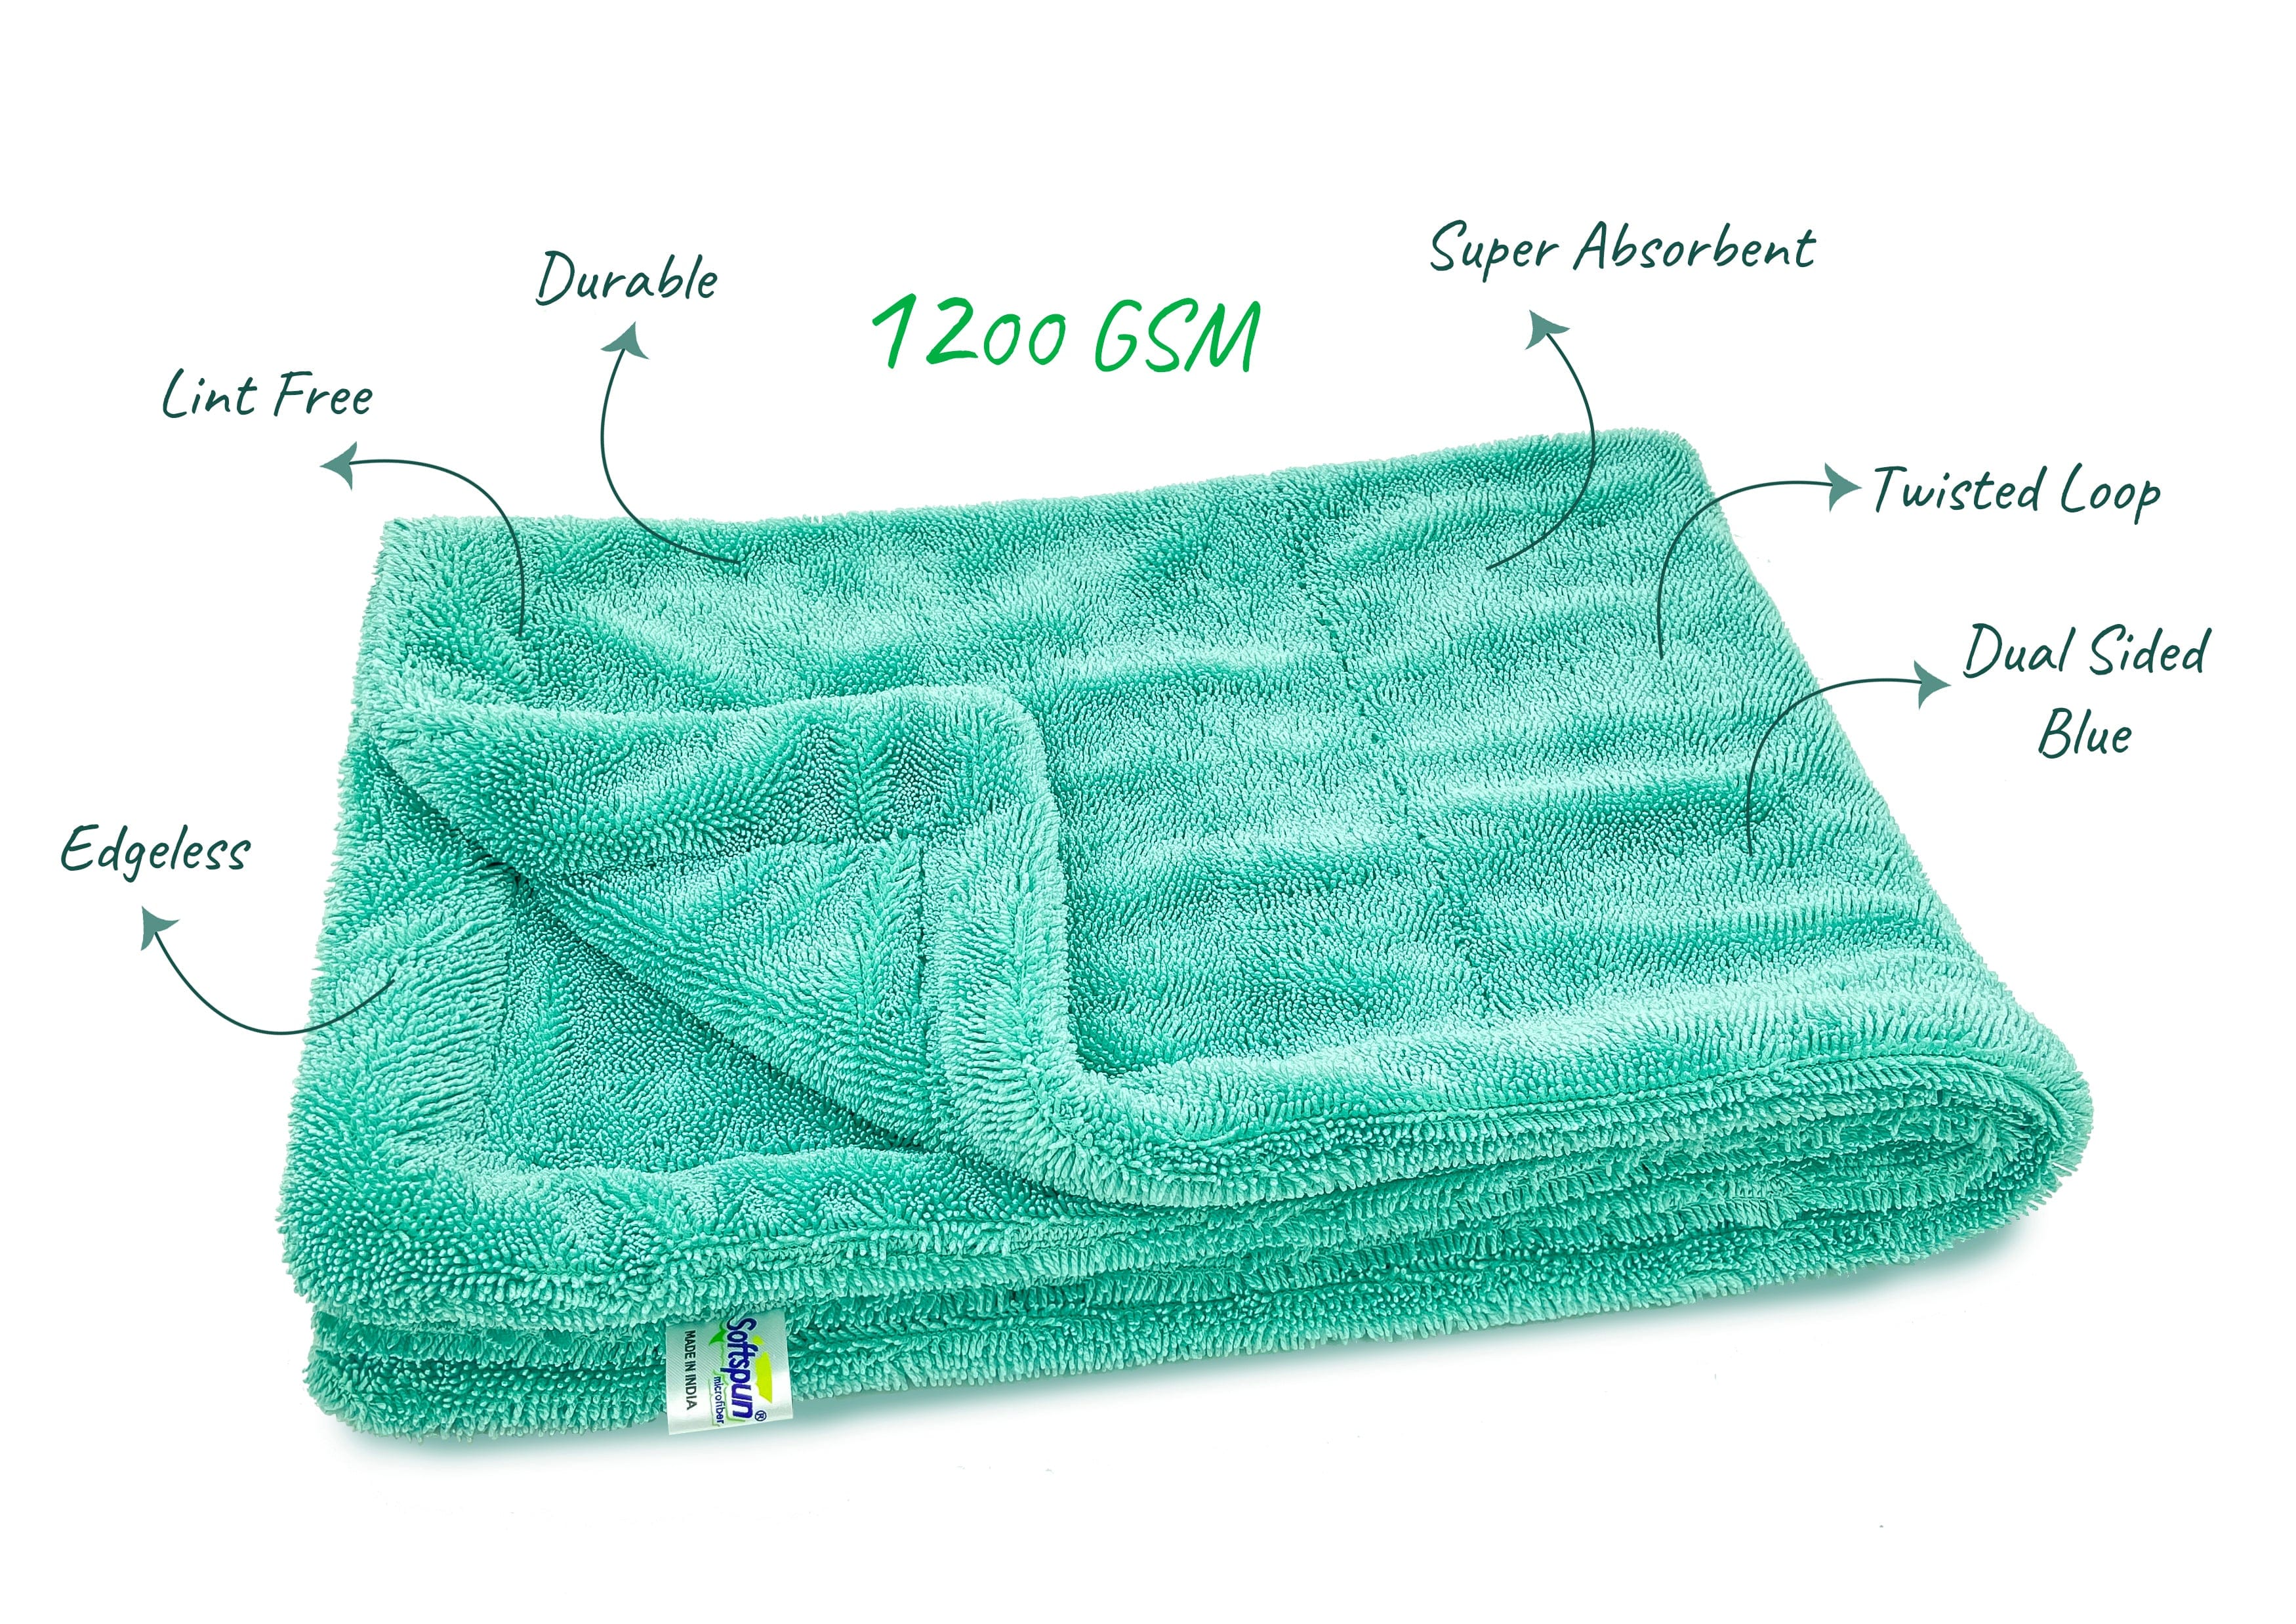 Edgeless 1200 GSM Microfiber lint free cloth - Softspun